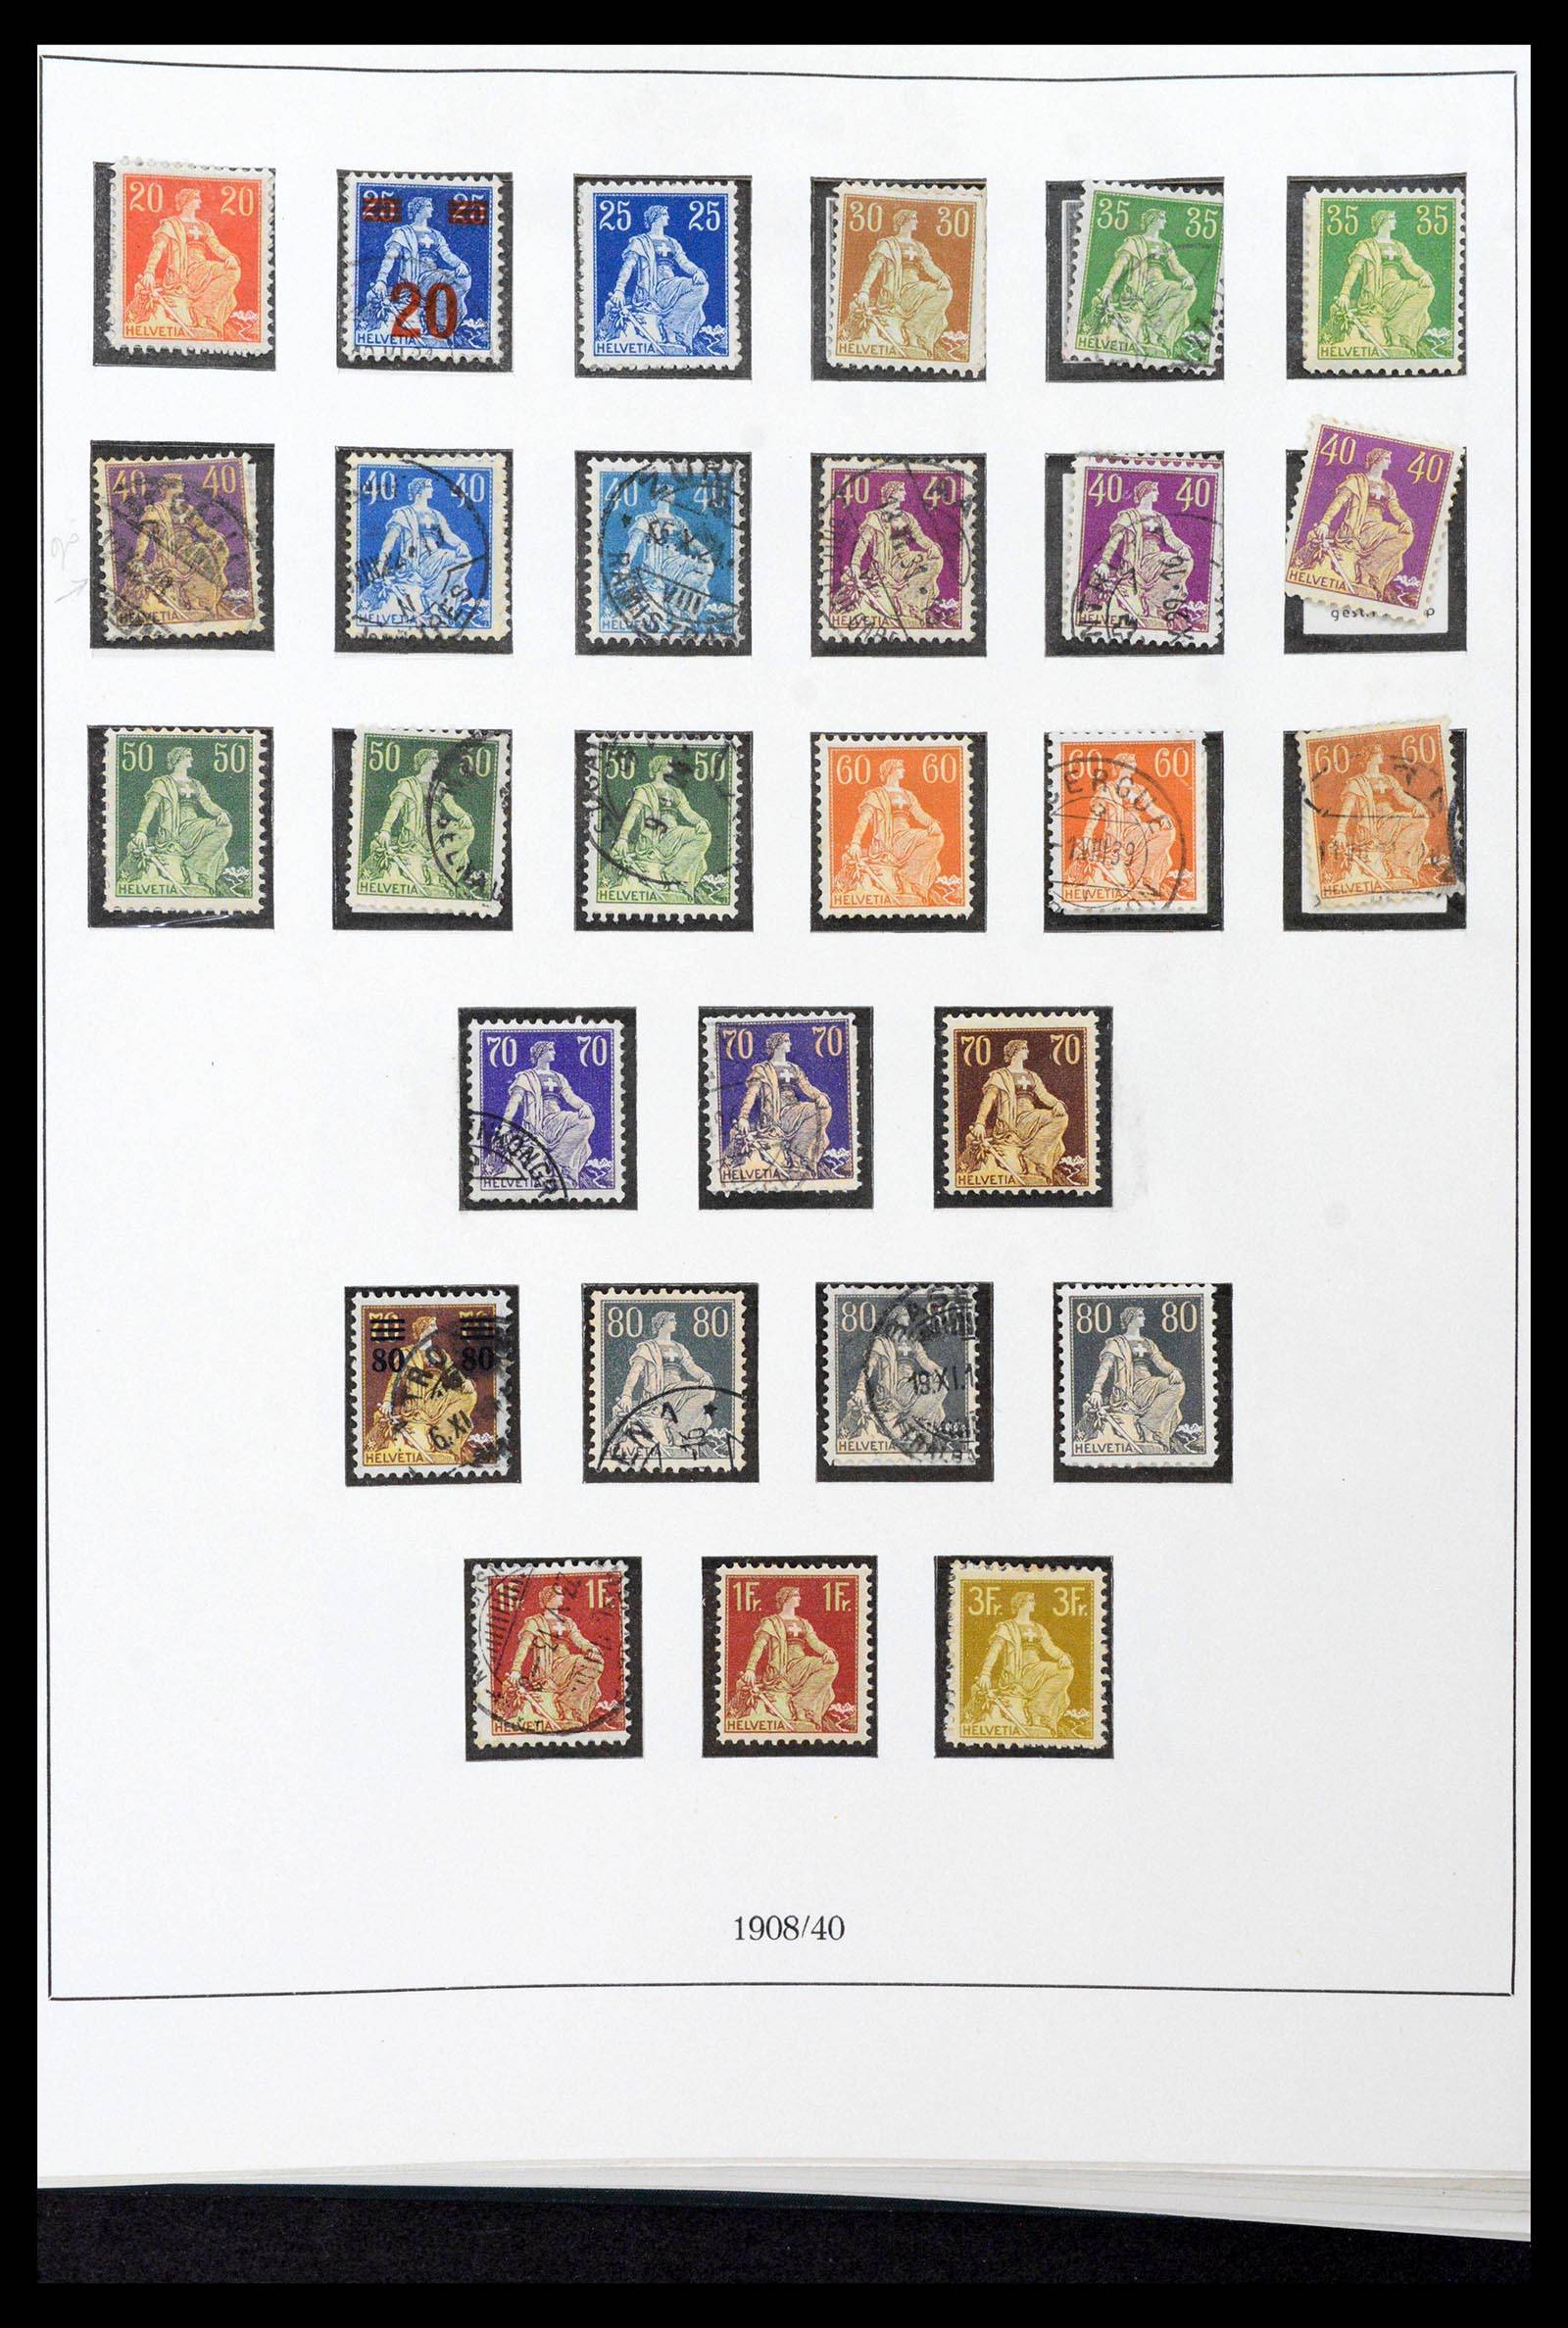 39235 0015 - Stamp collection 39235 Switzerland 1843-1960.